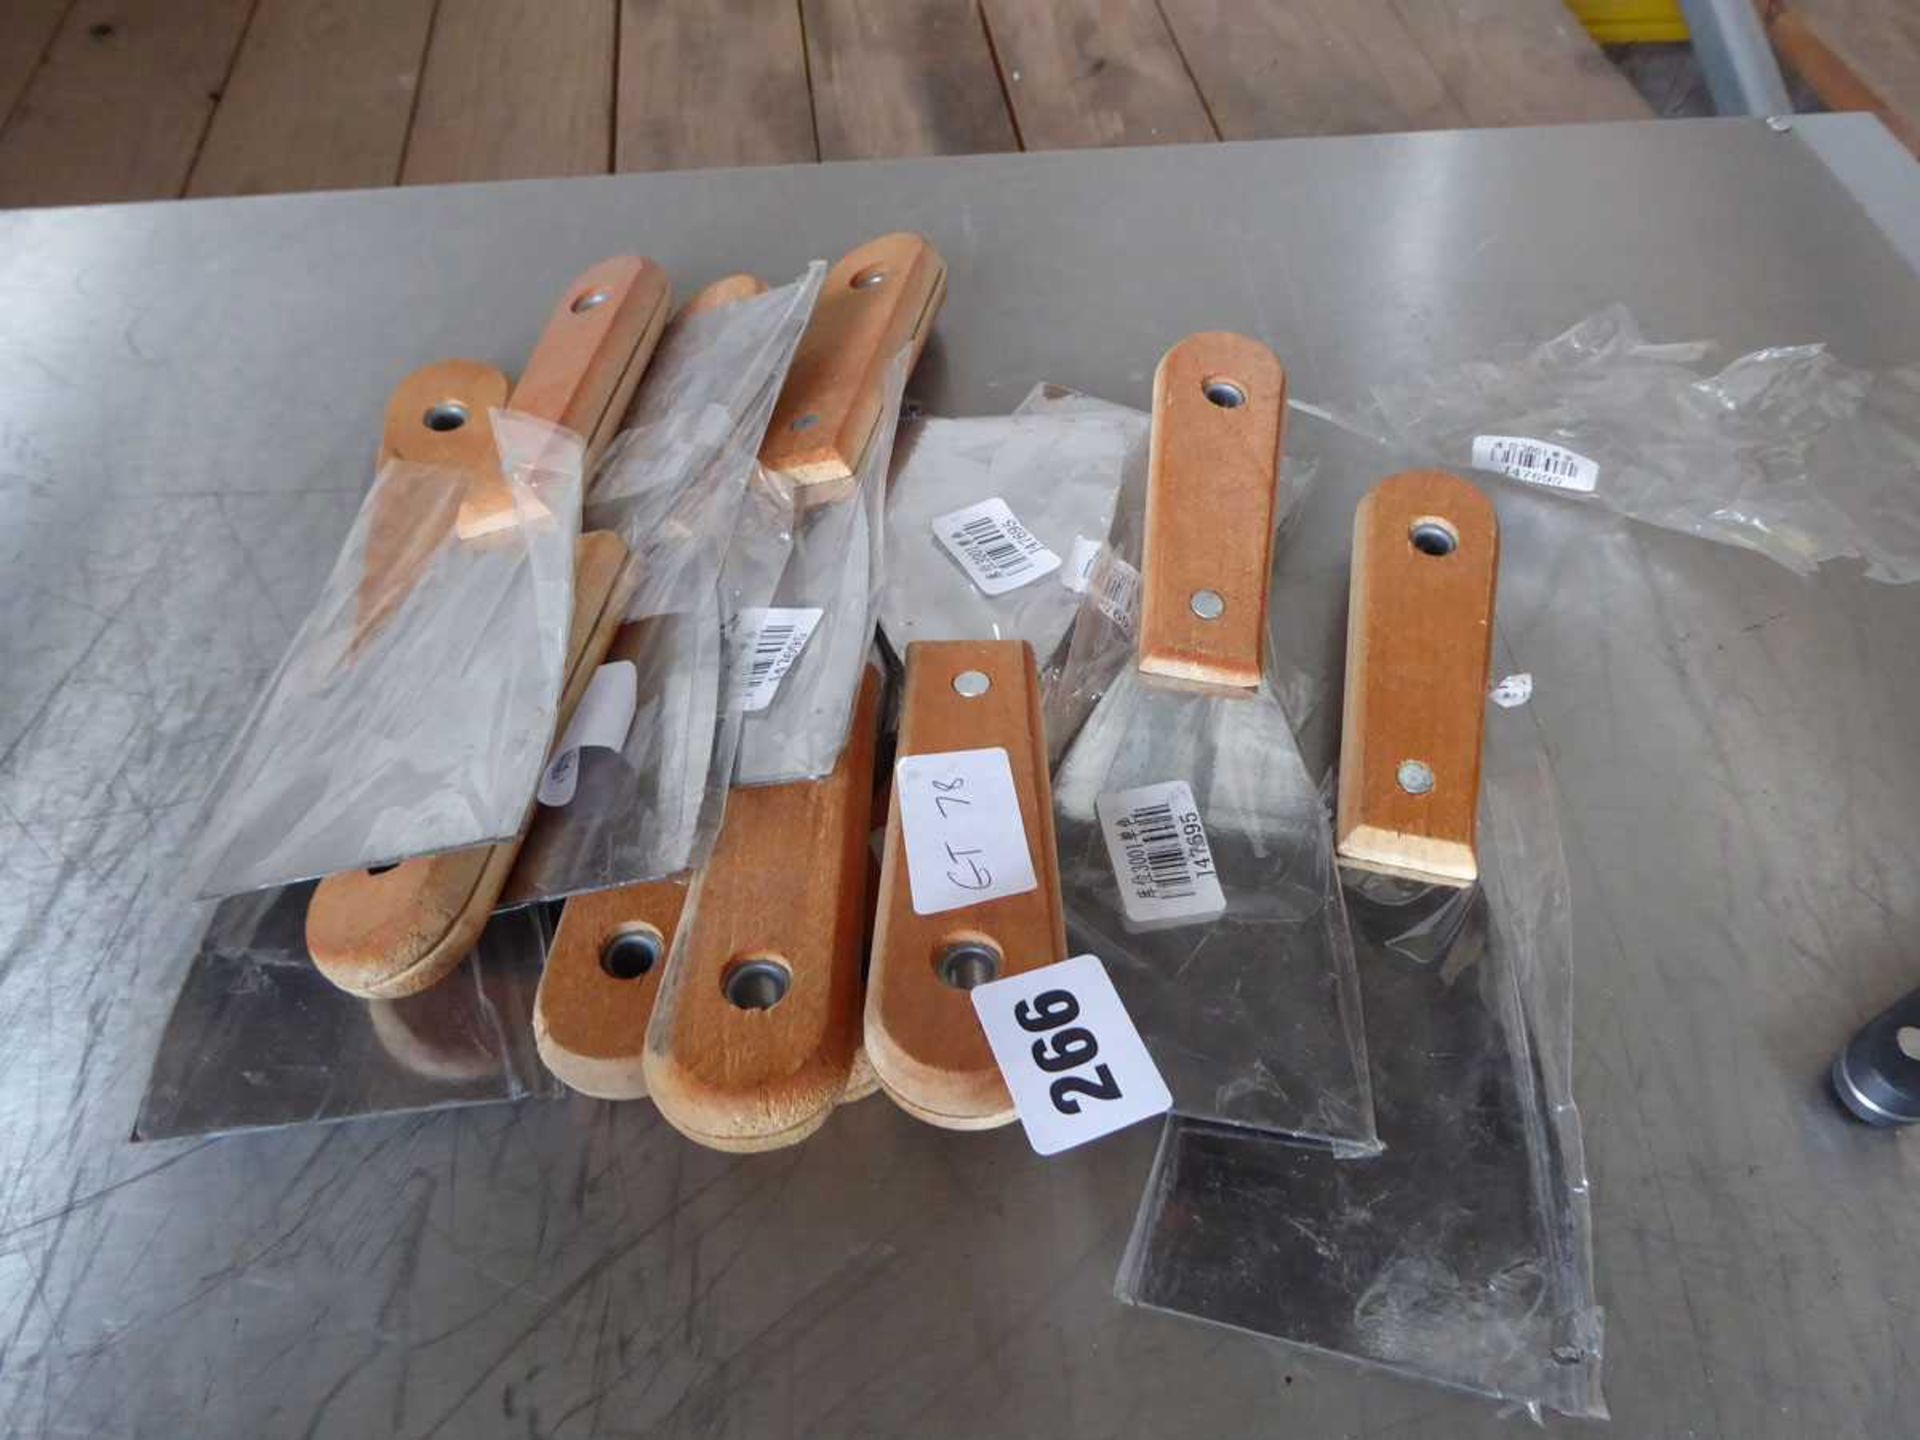 +VAT Small quantity of spatulas